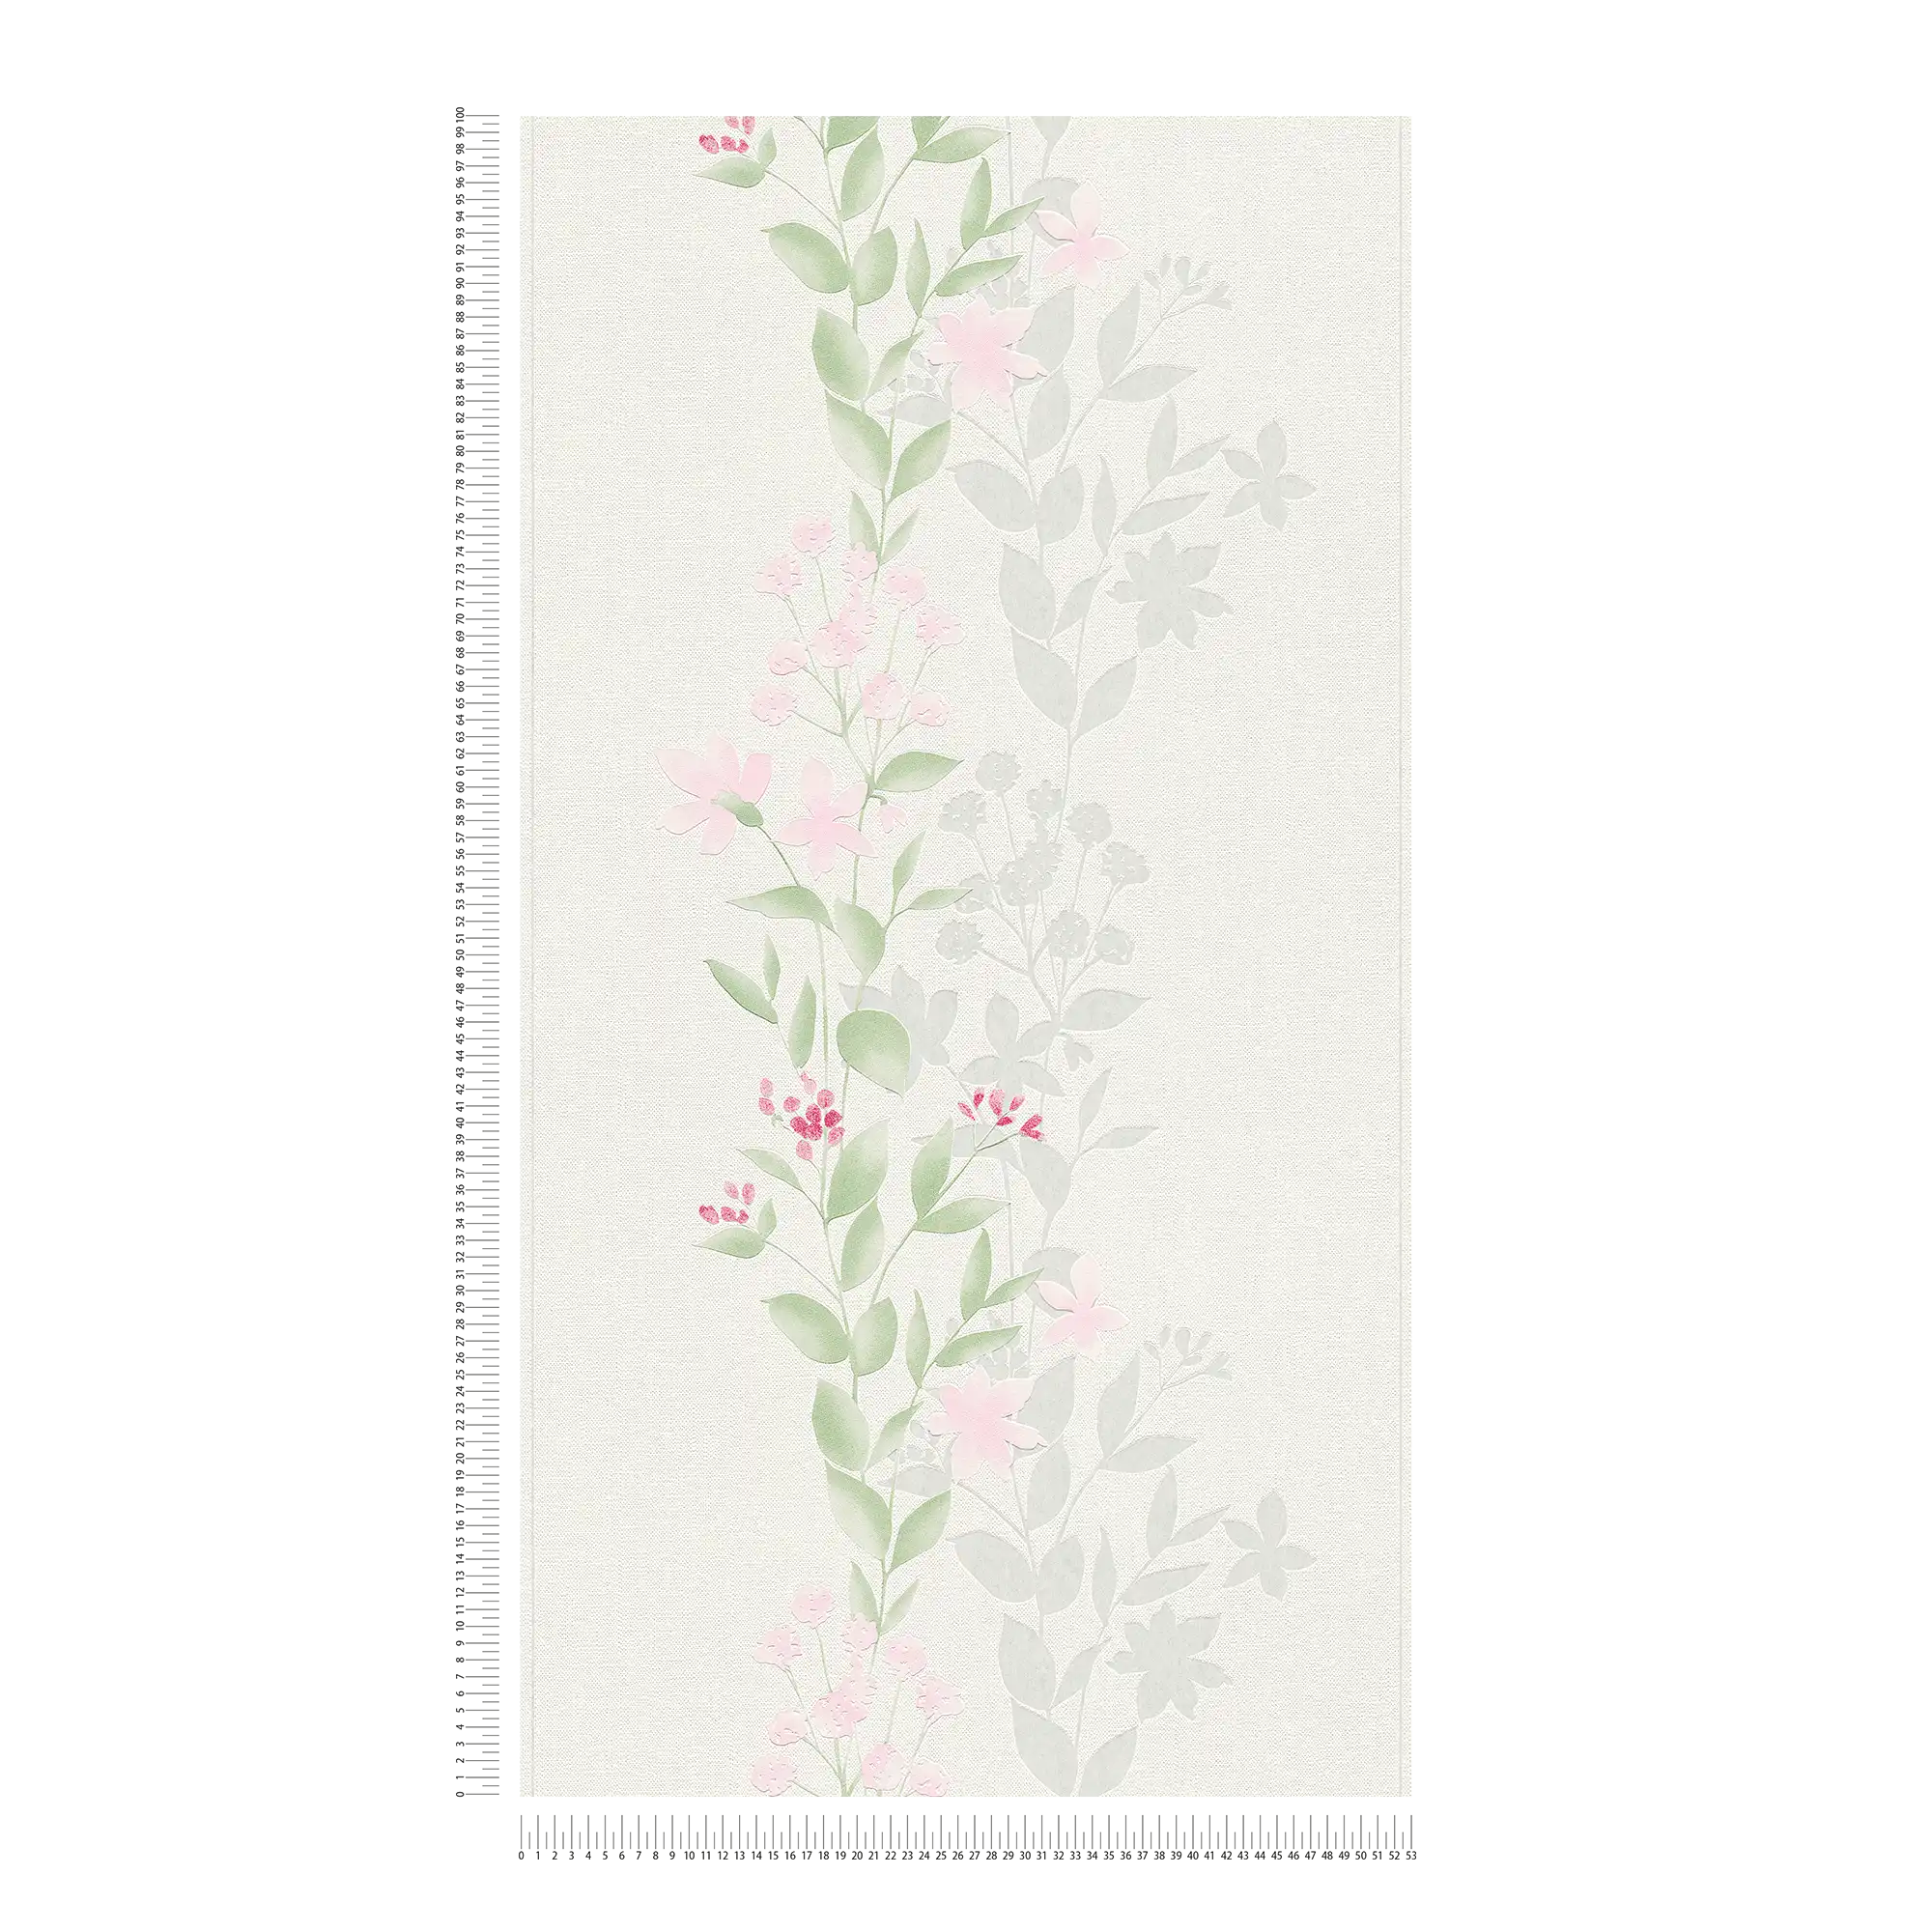             carta da parati a motivi floreali, effetto acquerello - grigio, verde, rosa
        